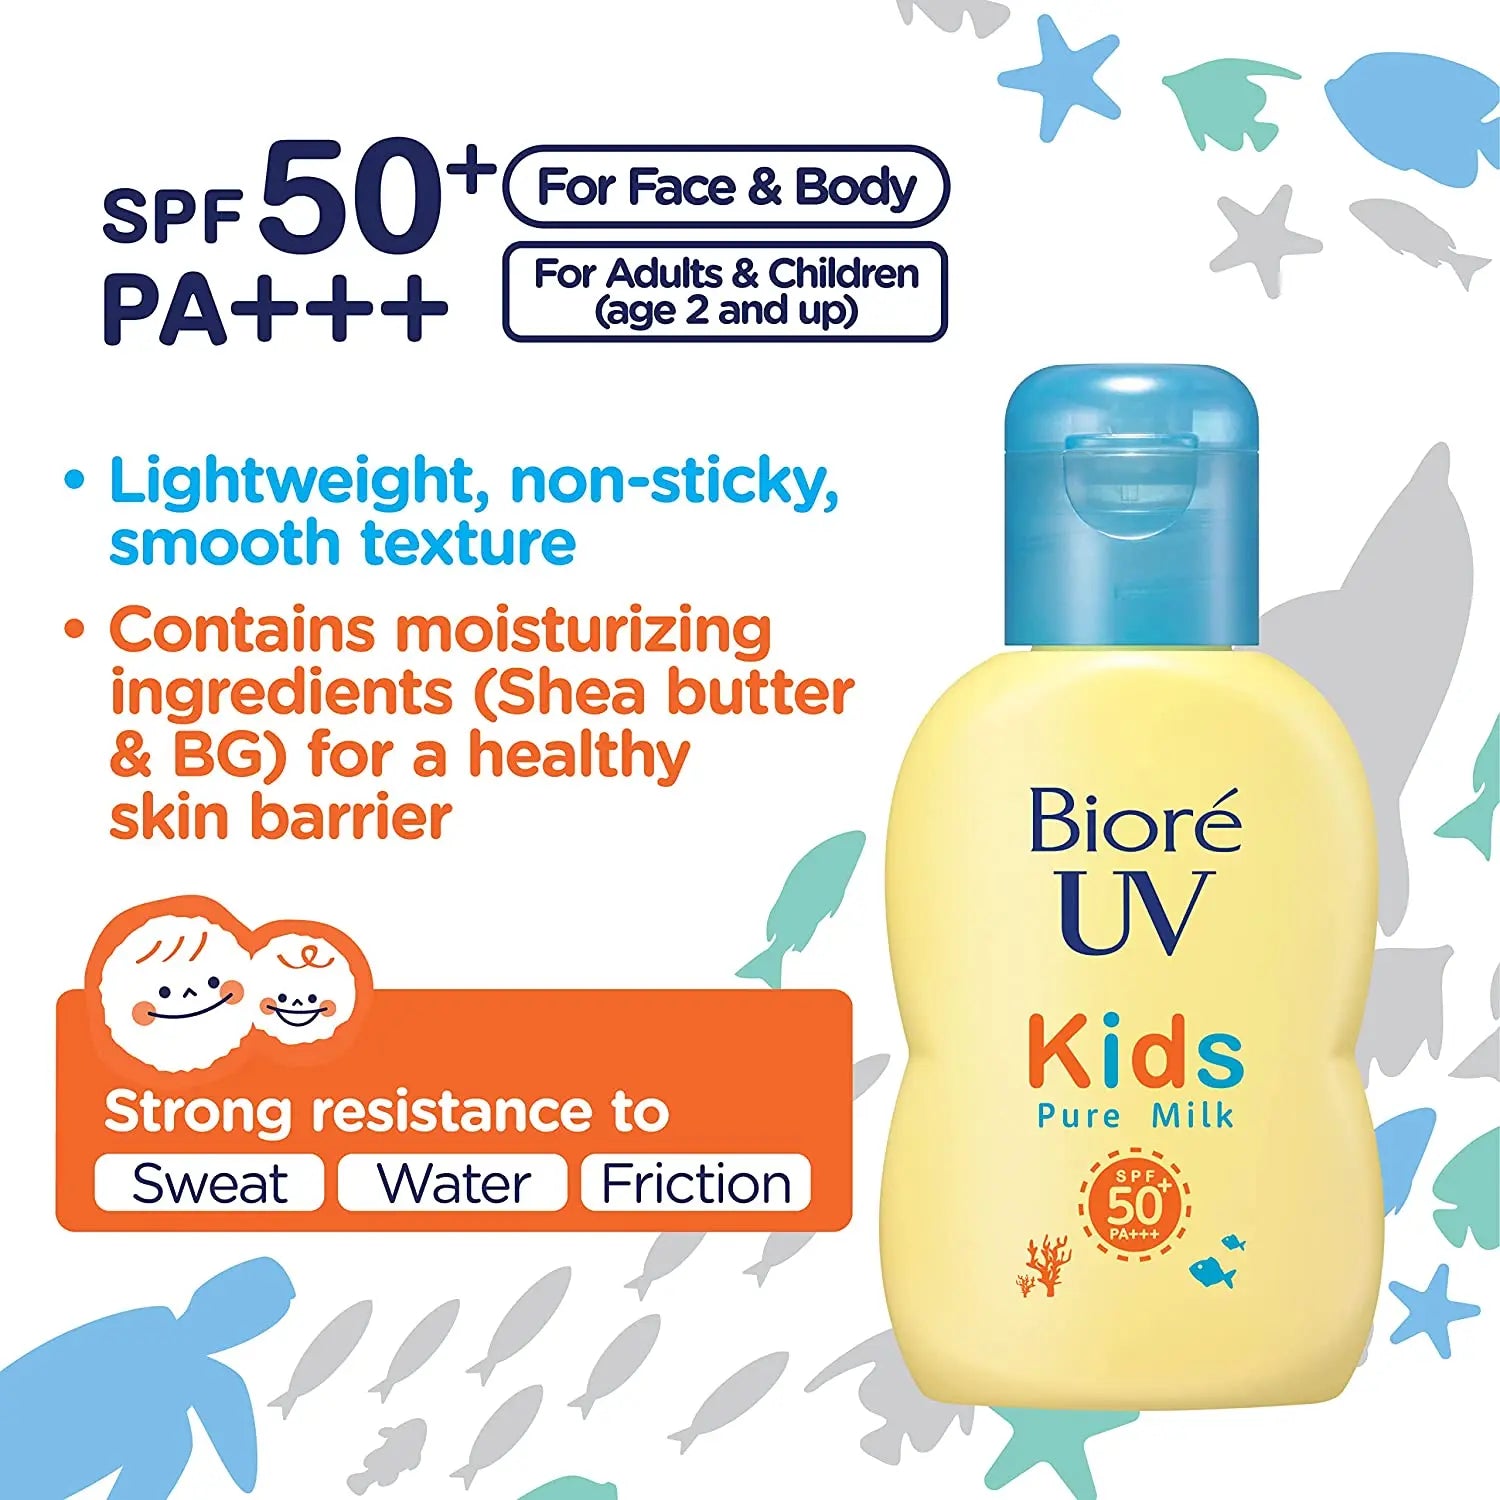 Biore UV Kids Pure Milk SPF 50+ PA+++ 70ml - Buy Me Japan